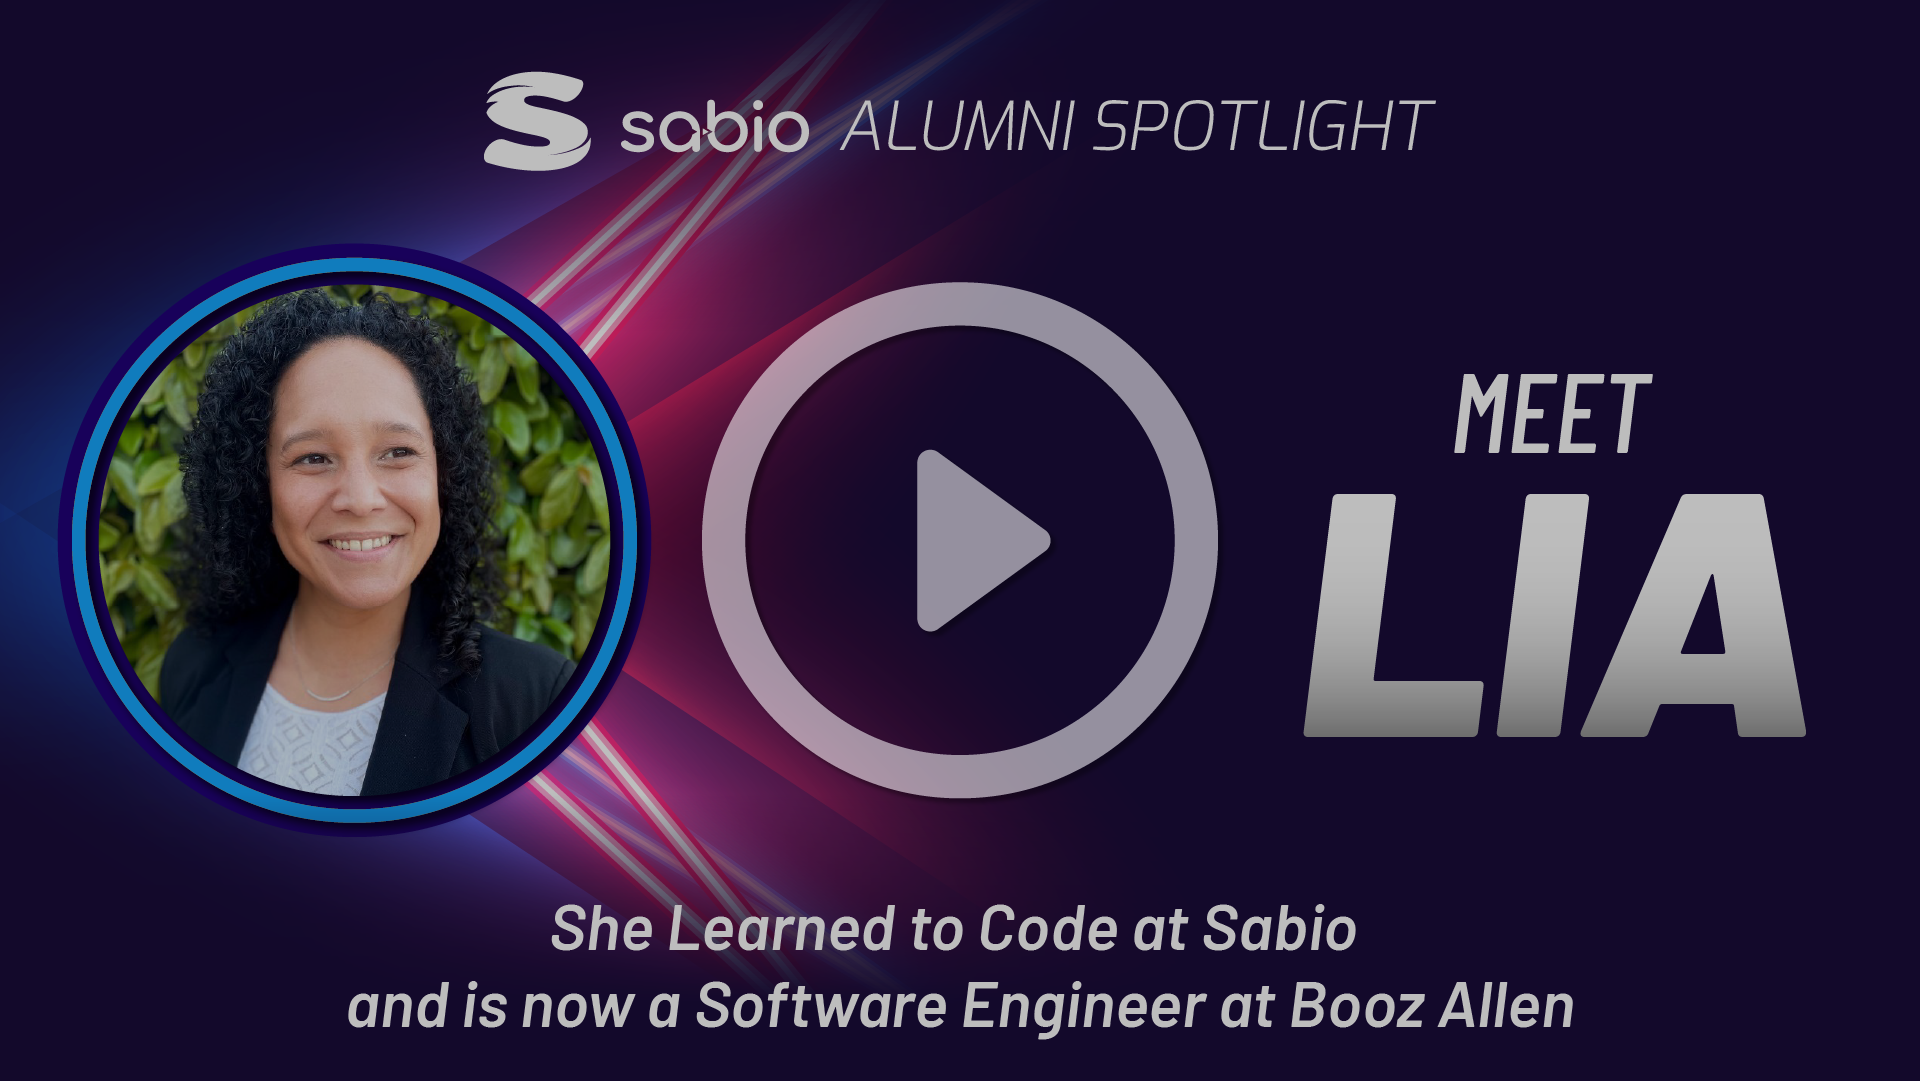 Sabio Alumni Spotlight: Lia. Play symbol overlaid to the image.